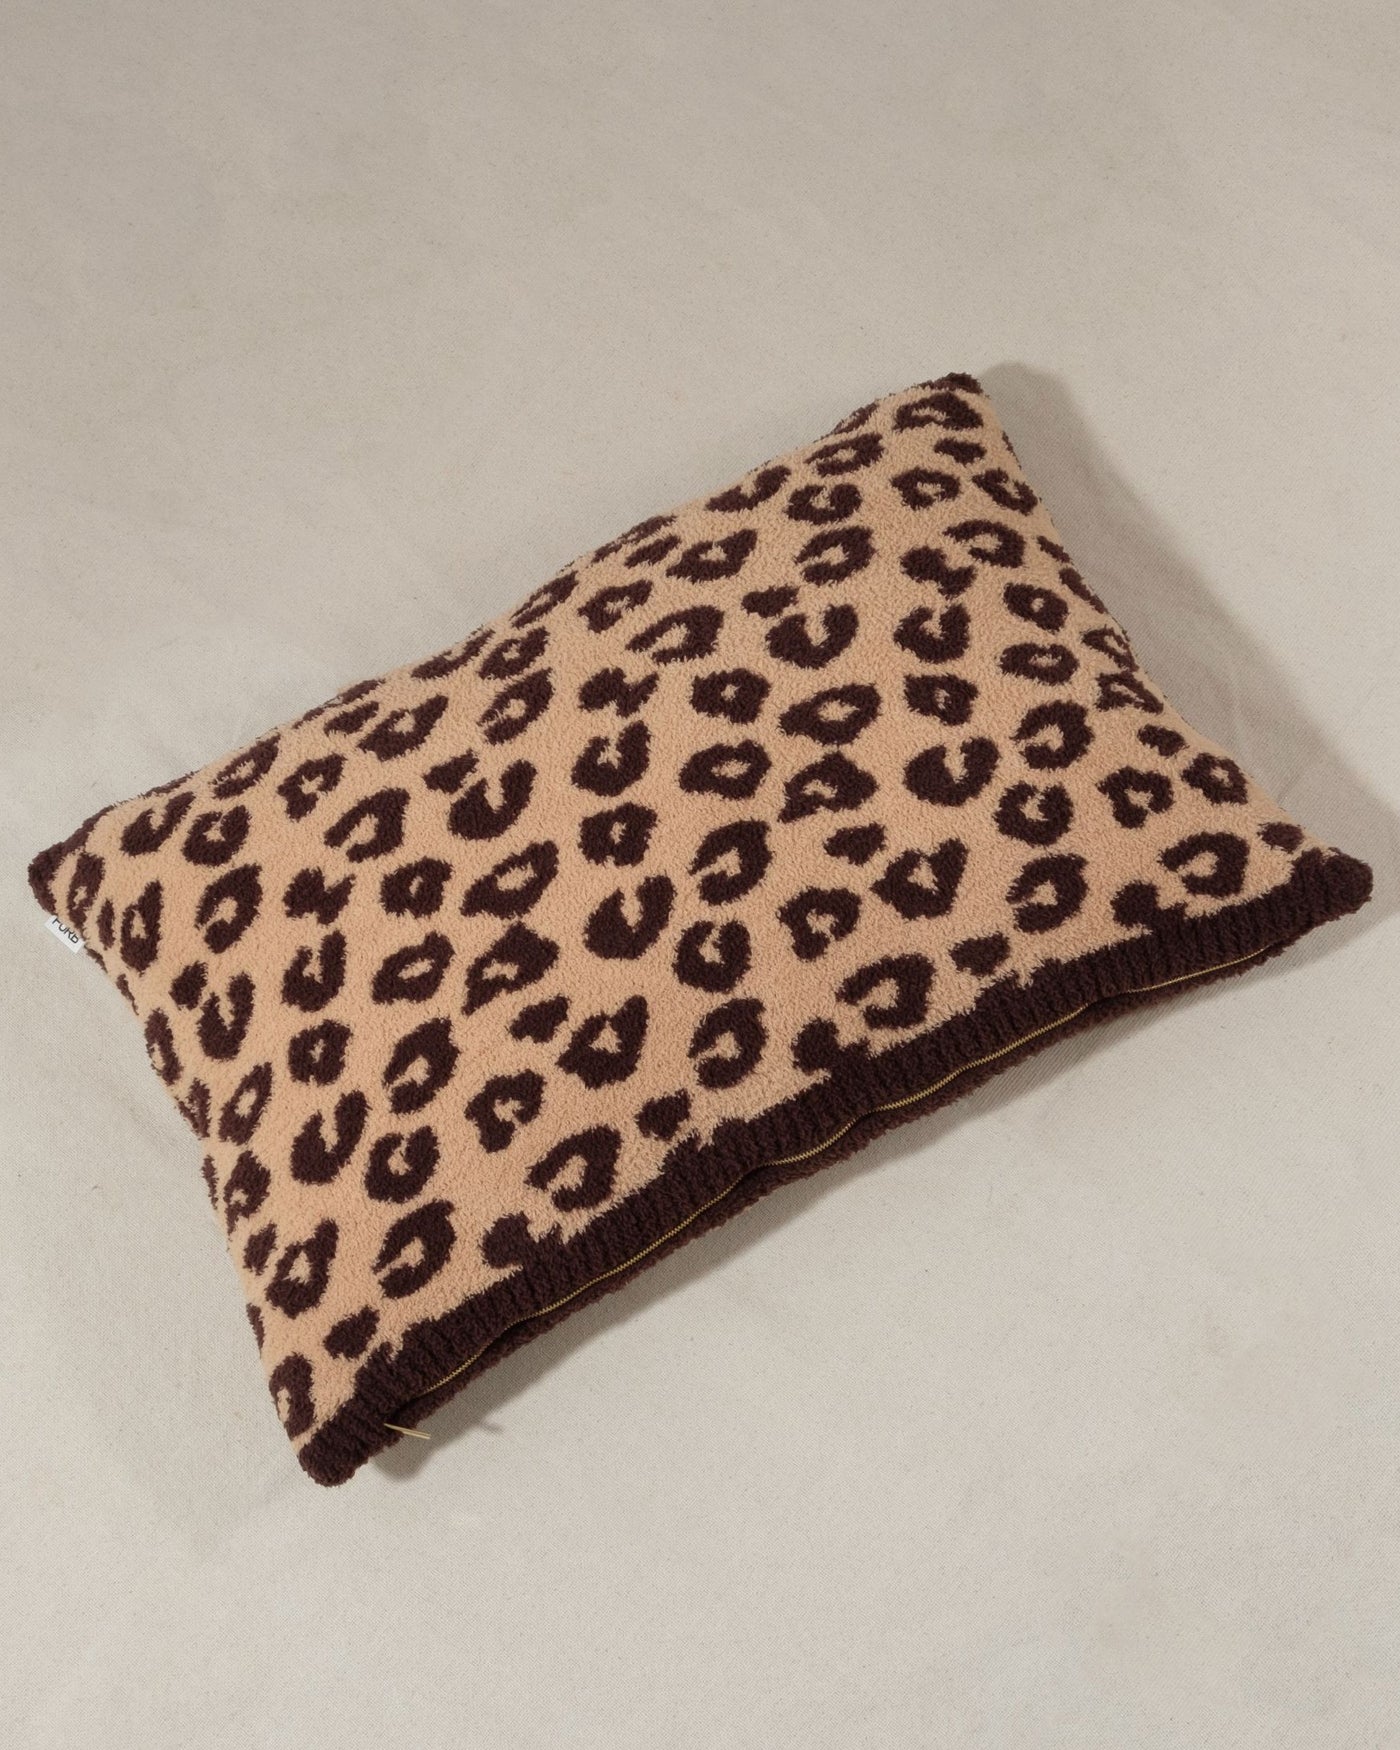 Snuggle Knit Tan Leopard Dog Bed Image